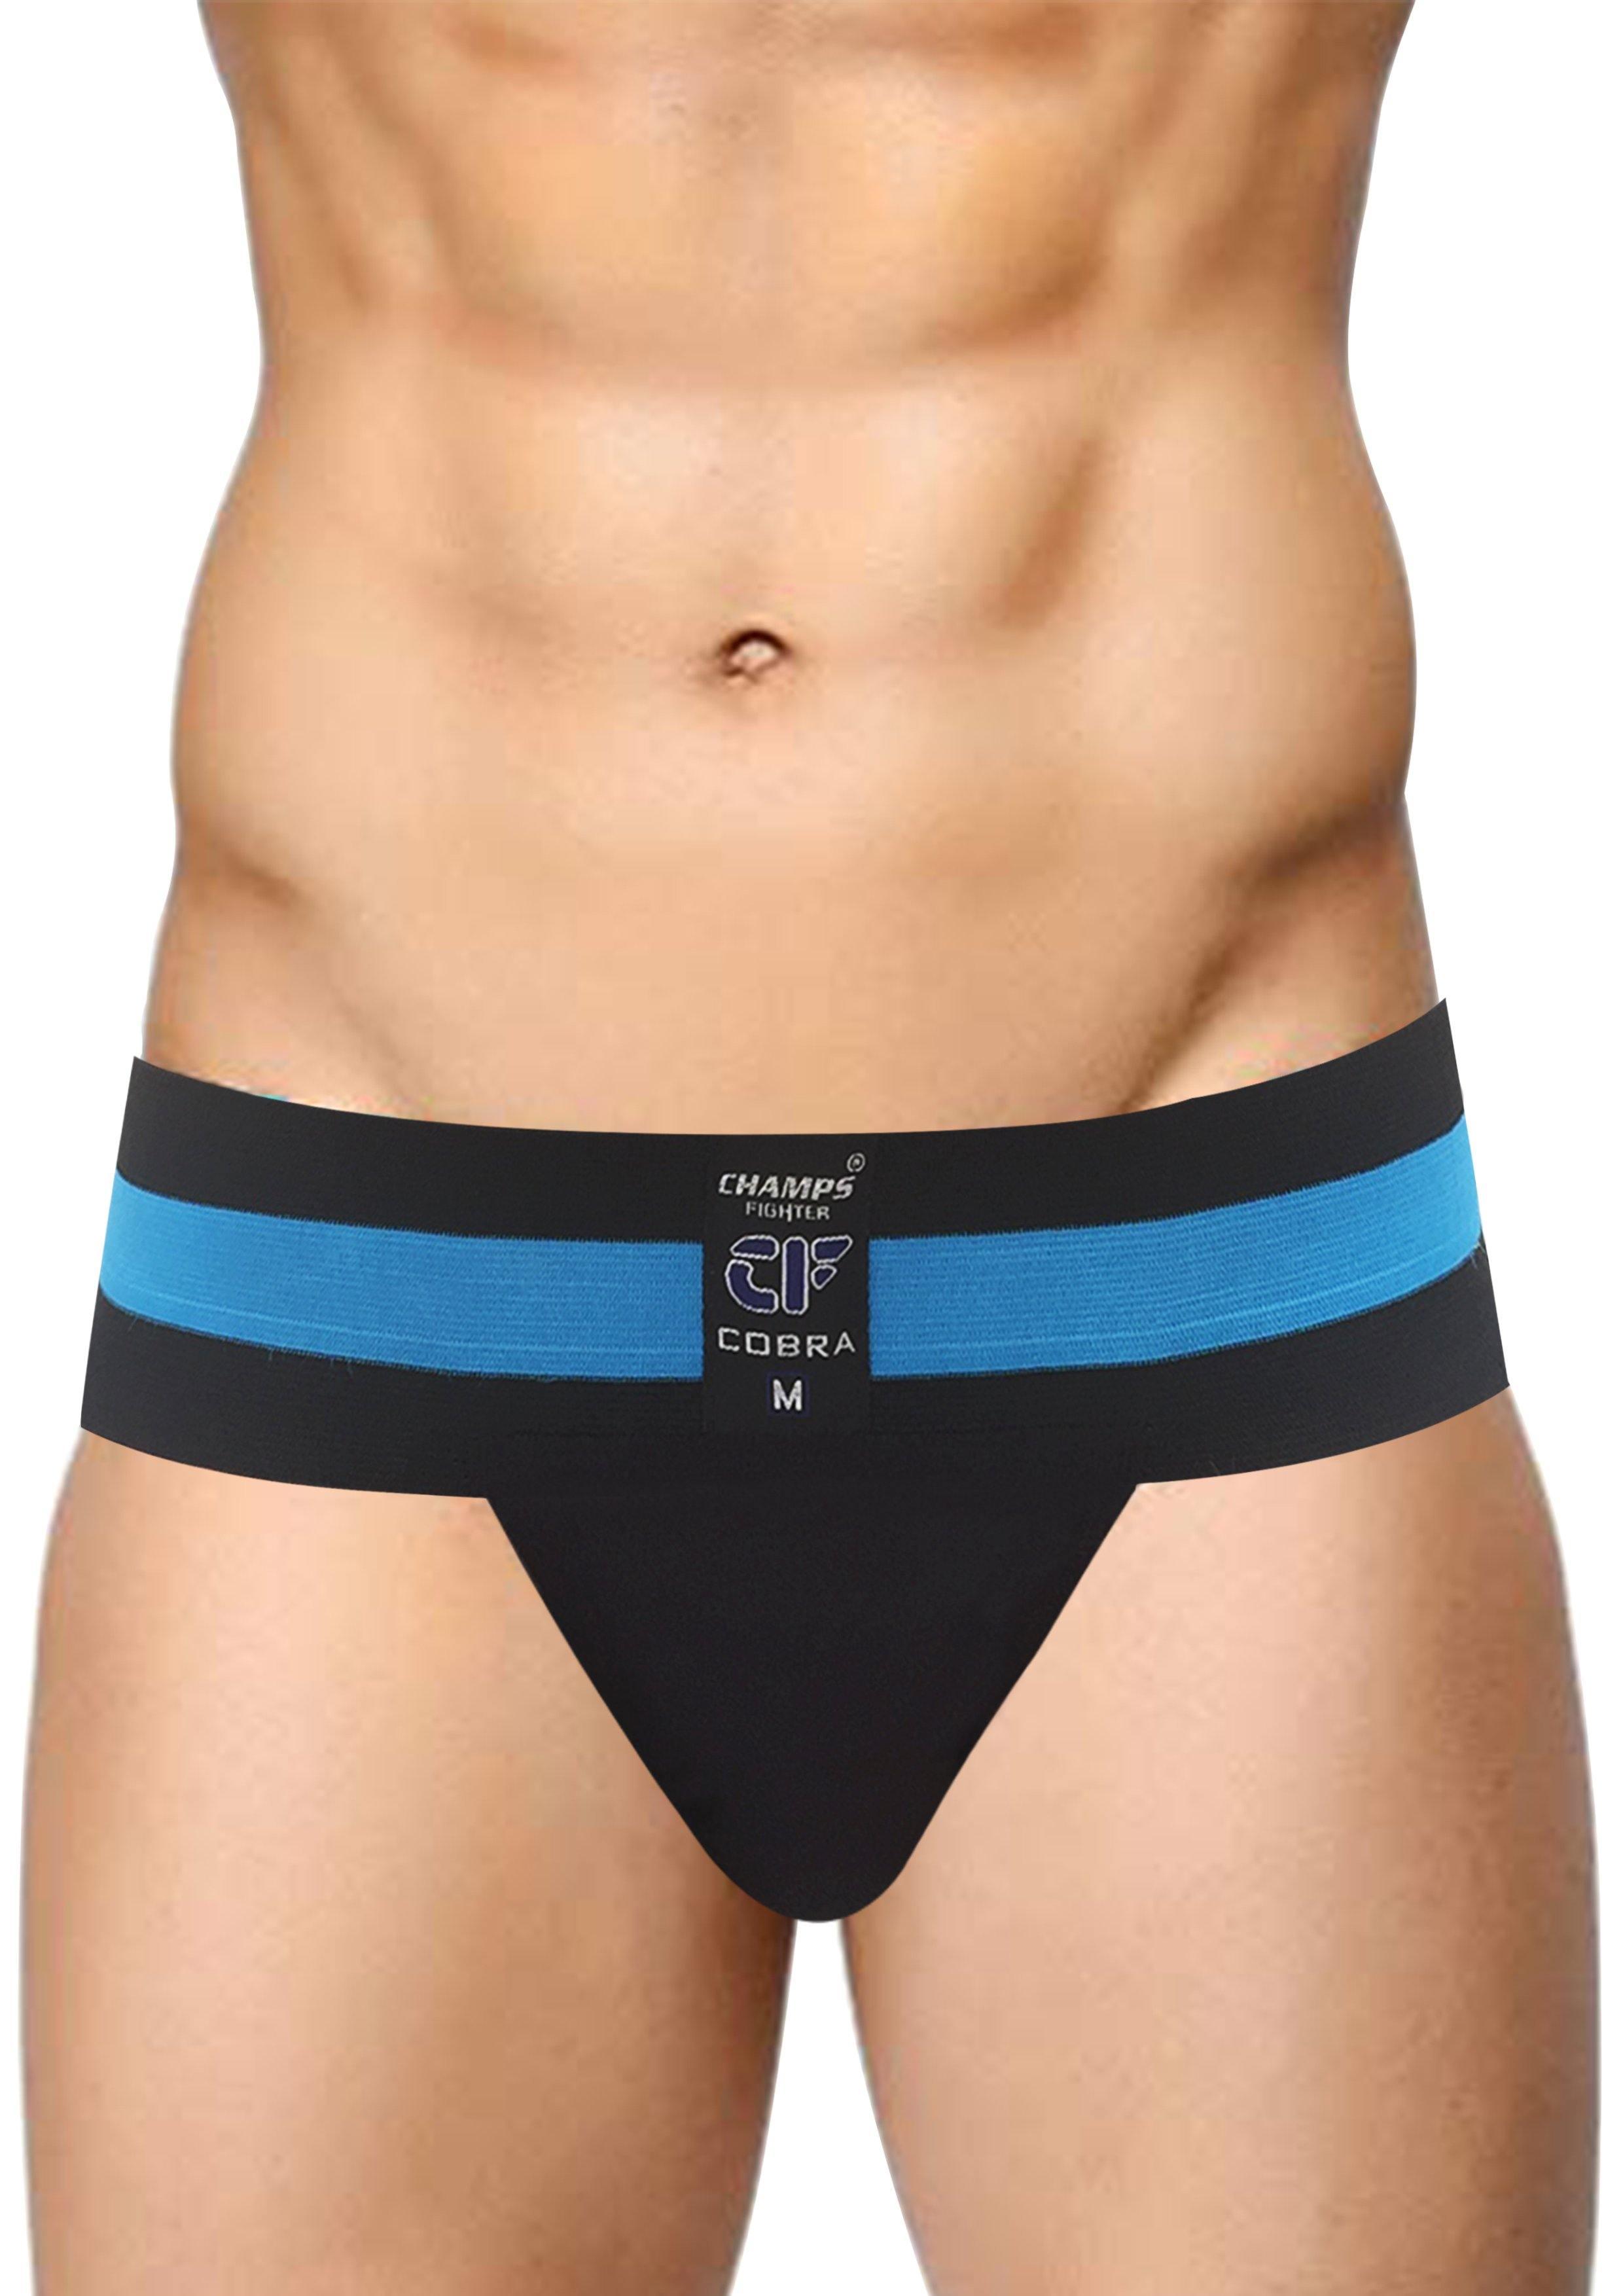 OPTIMUM GALLERY Fitness Fighter Frenchie Gym Supporter Underwear